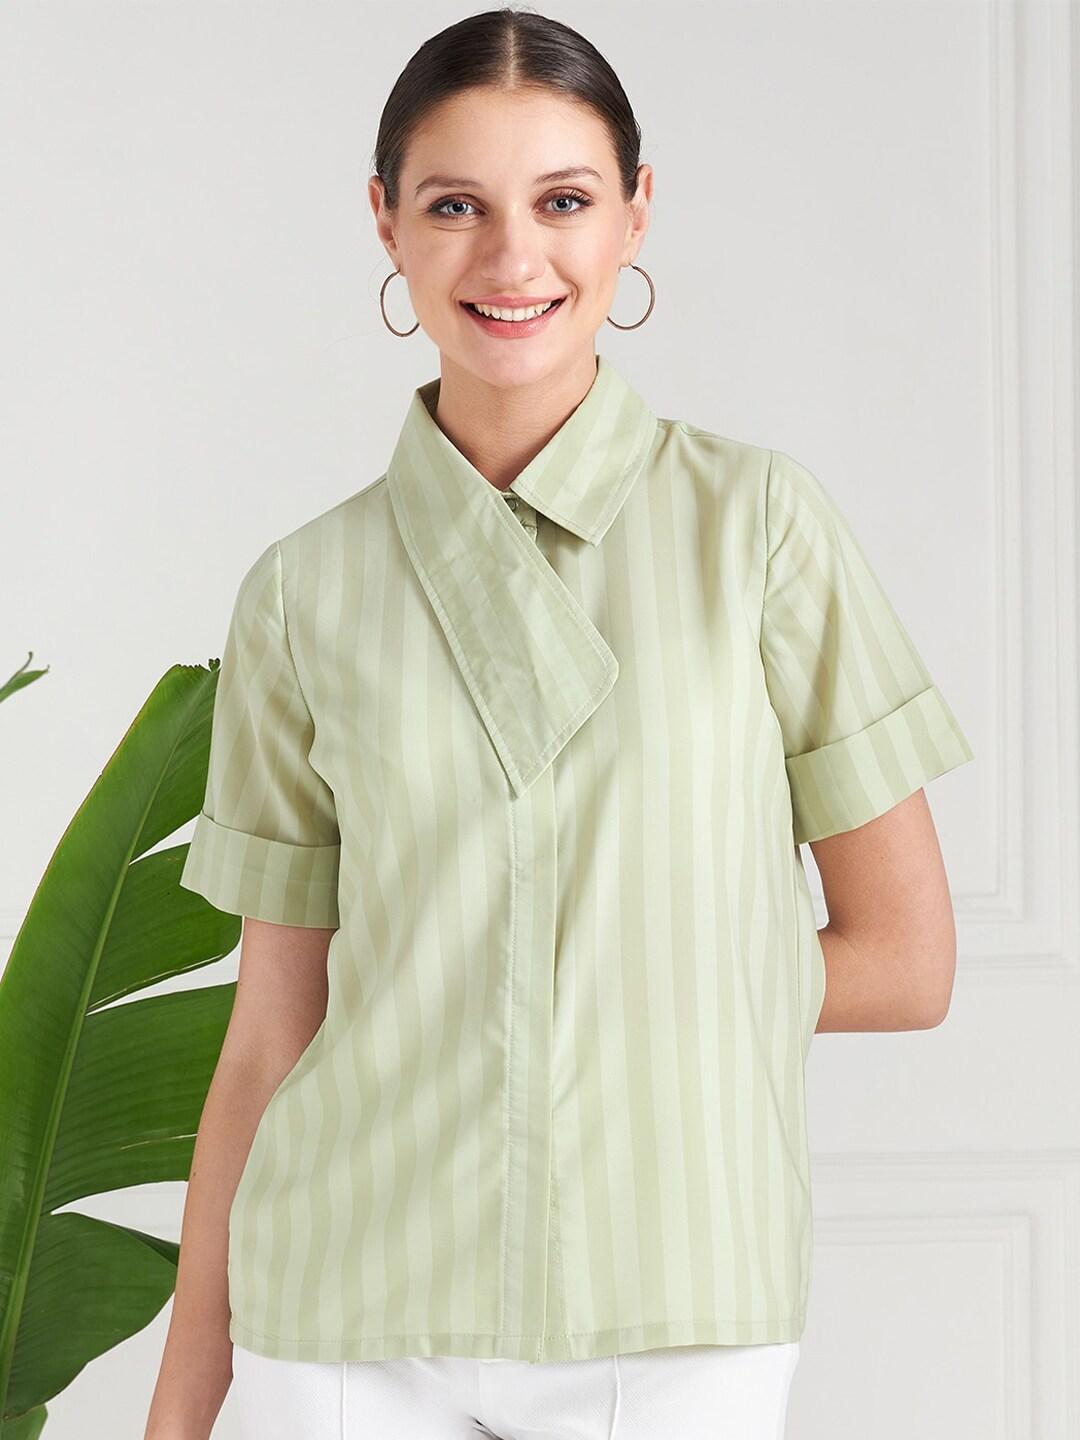 athena green striped shirt style top